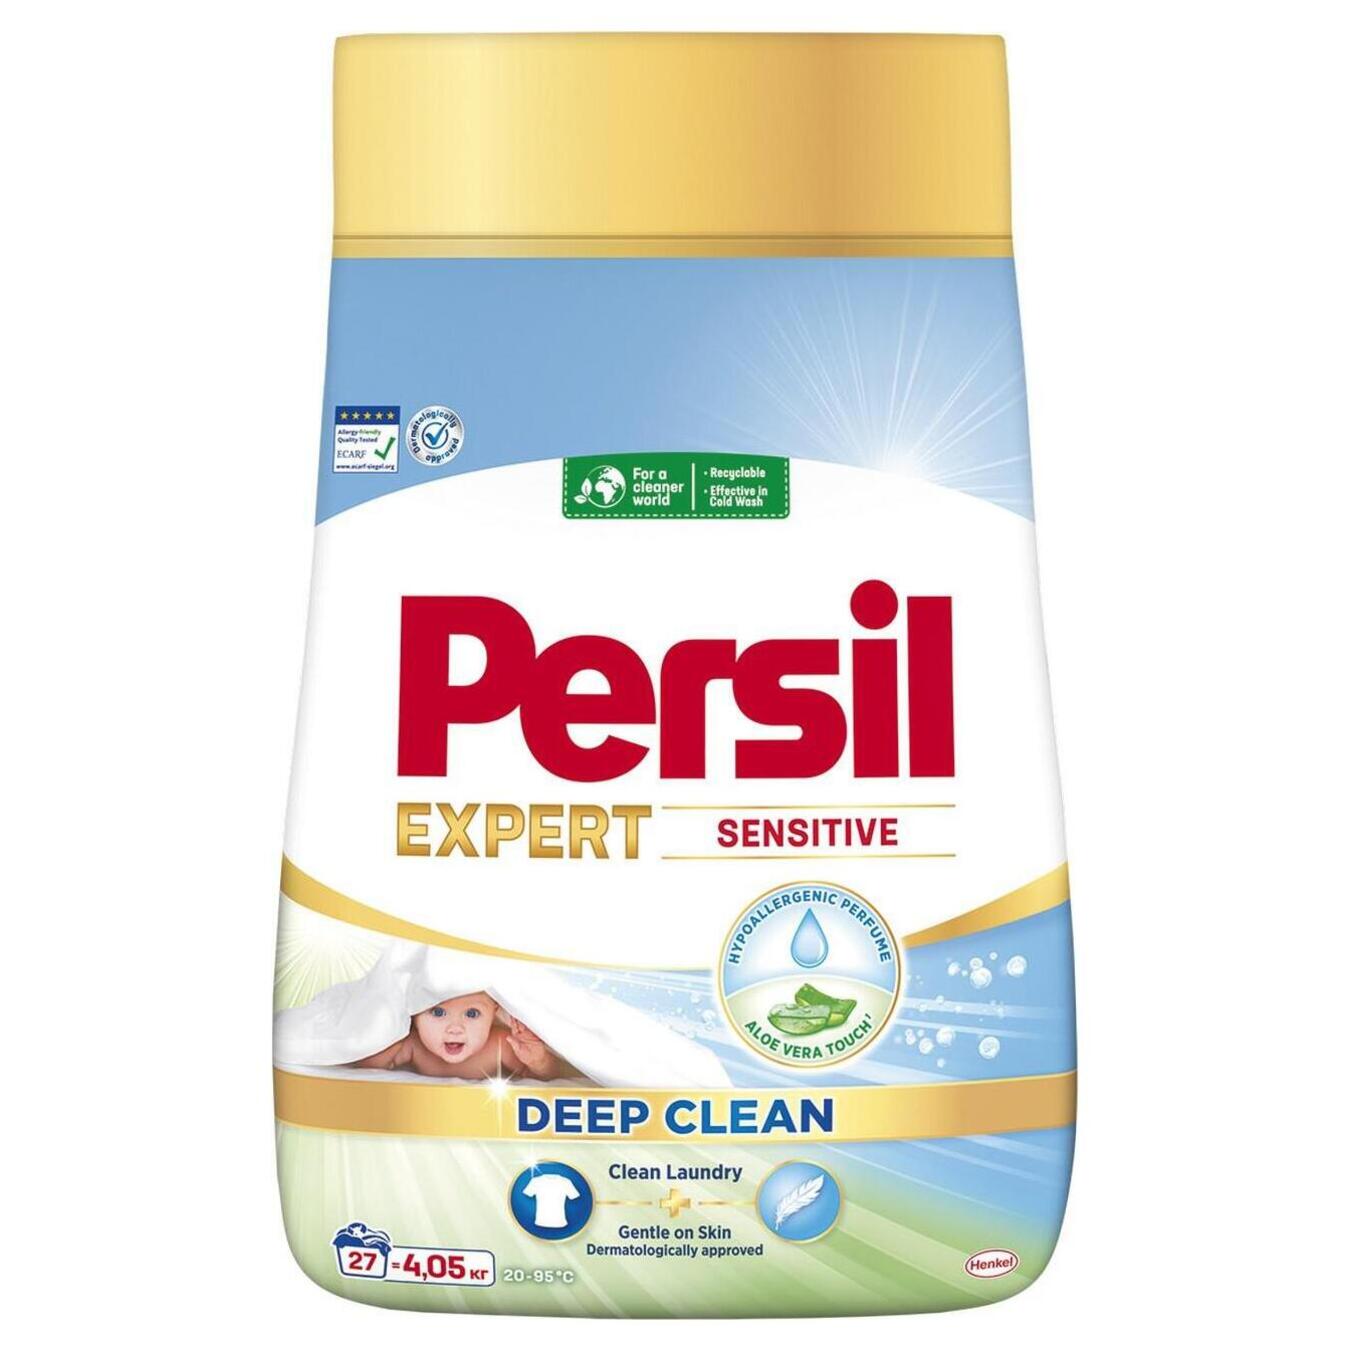 Persil Sensitiv automatic washing powder 4.05 kg